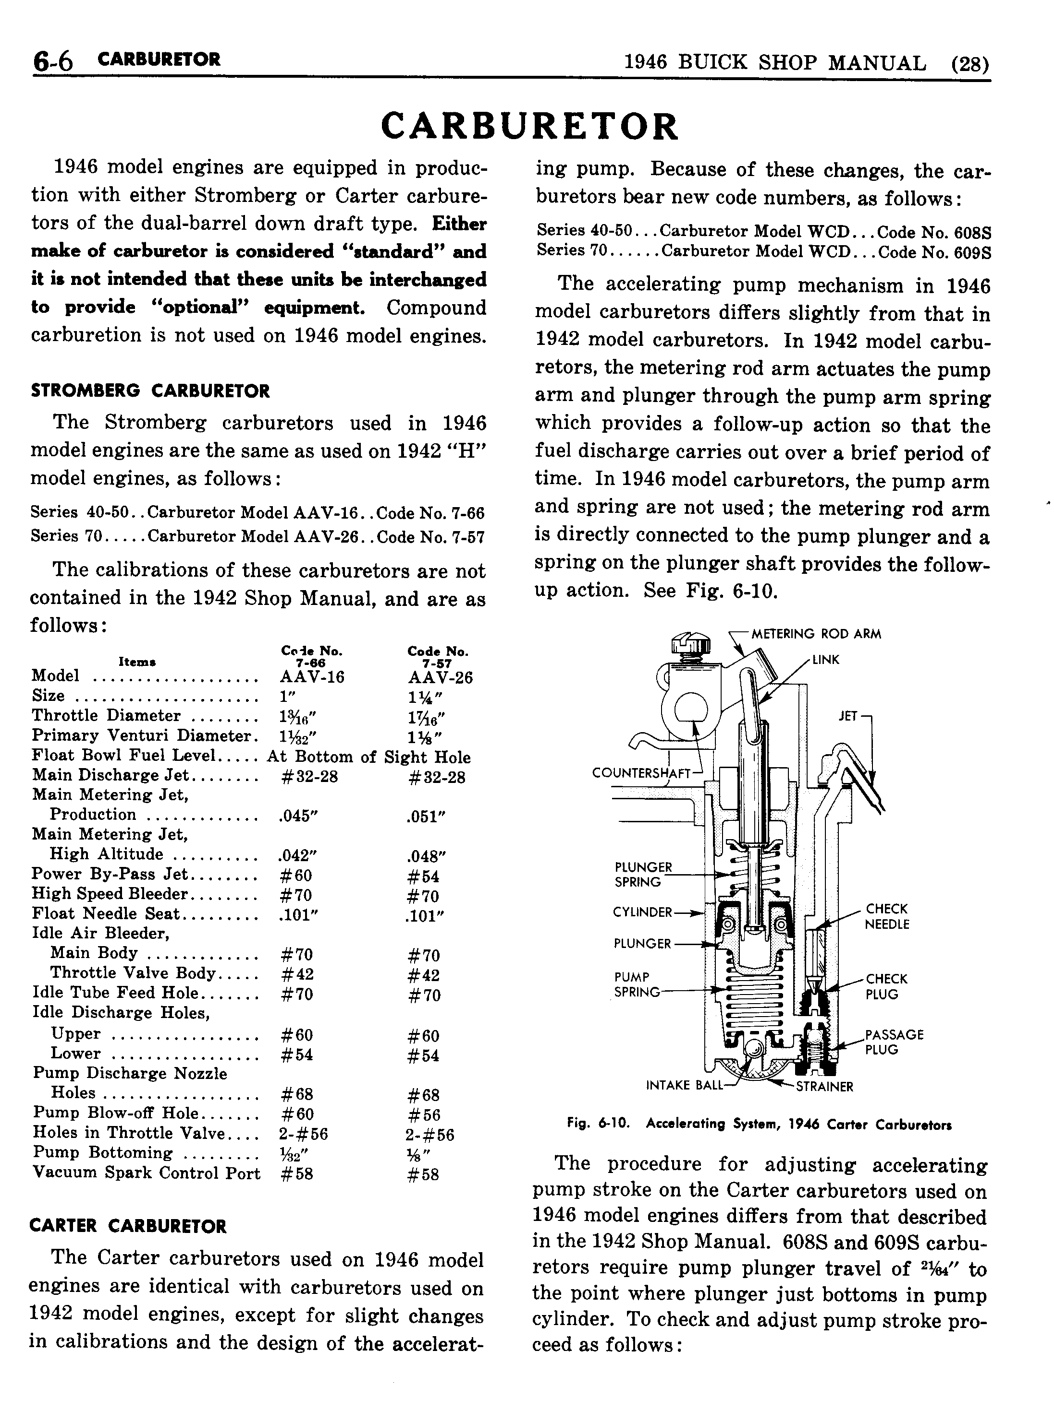 n_07 1946 Buick Shop Manual - Engine-006-006.jpg